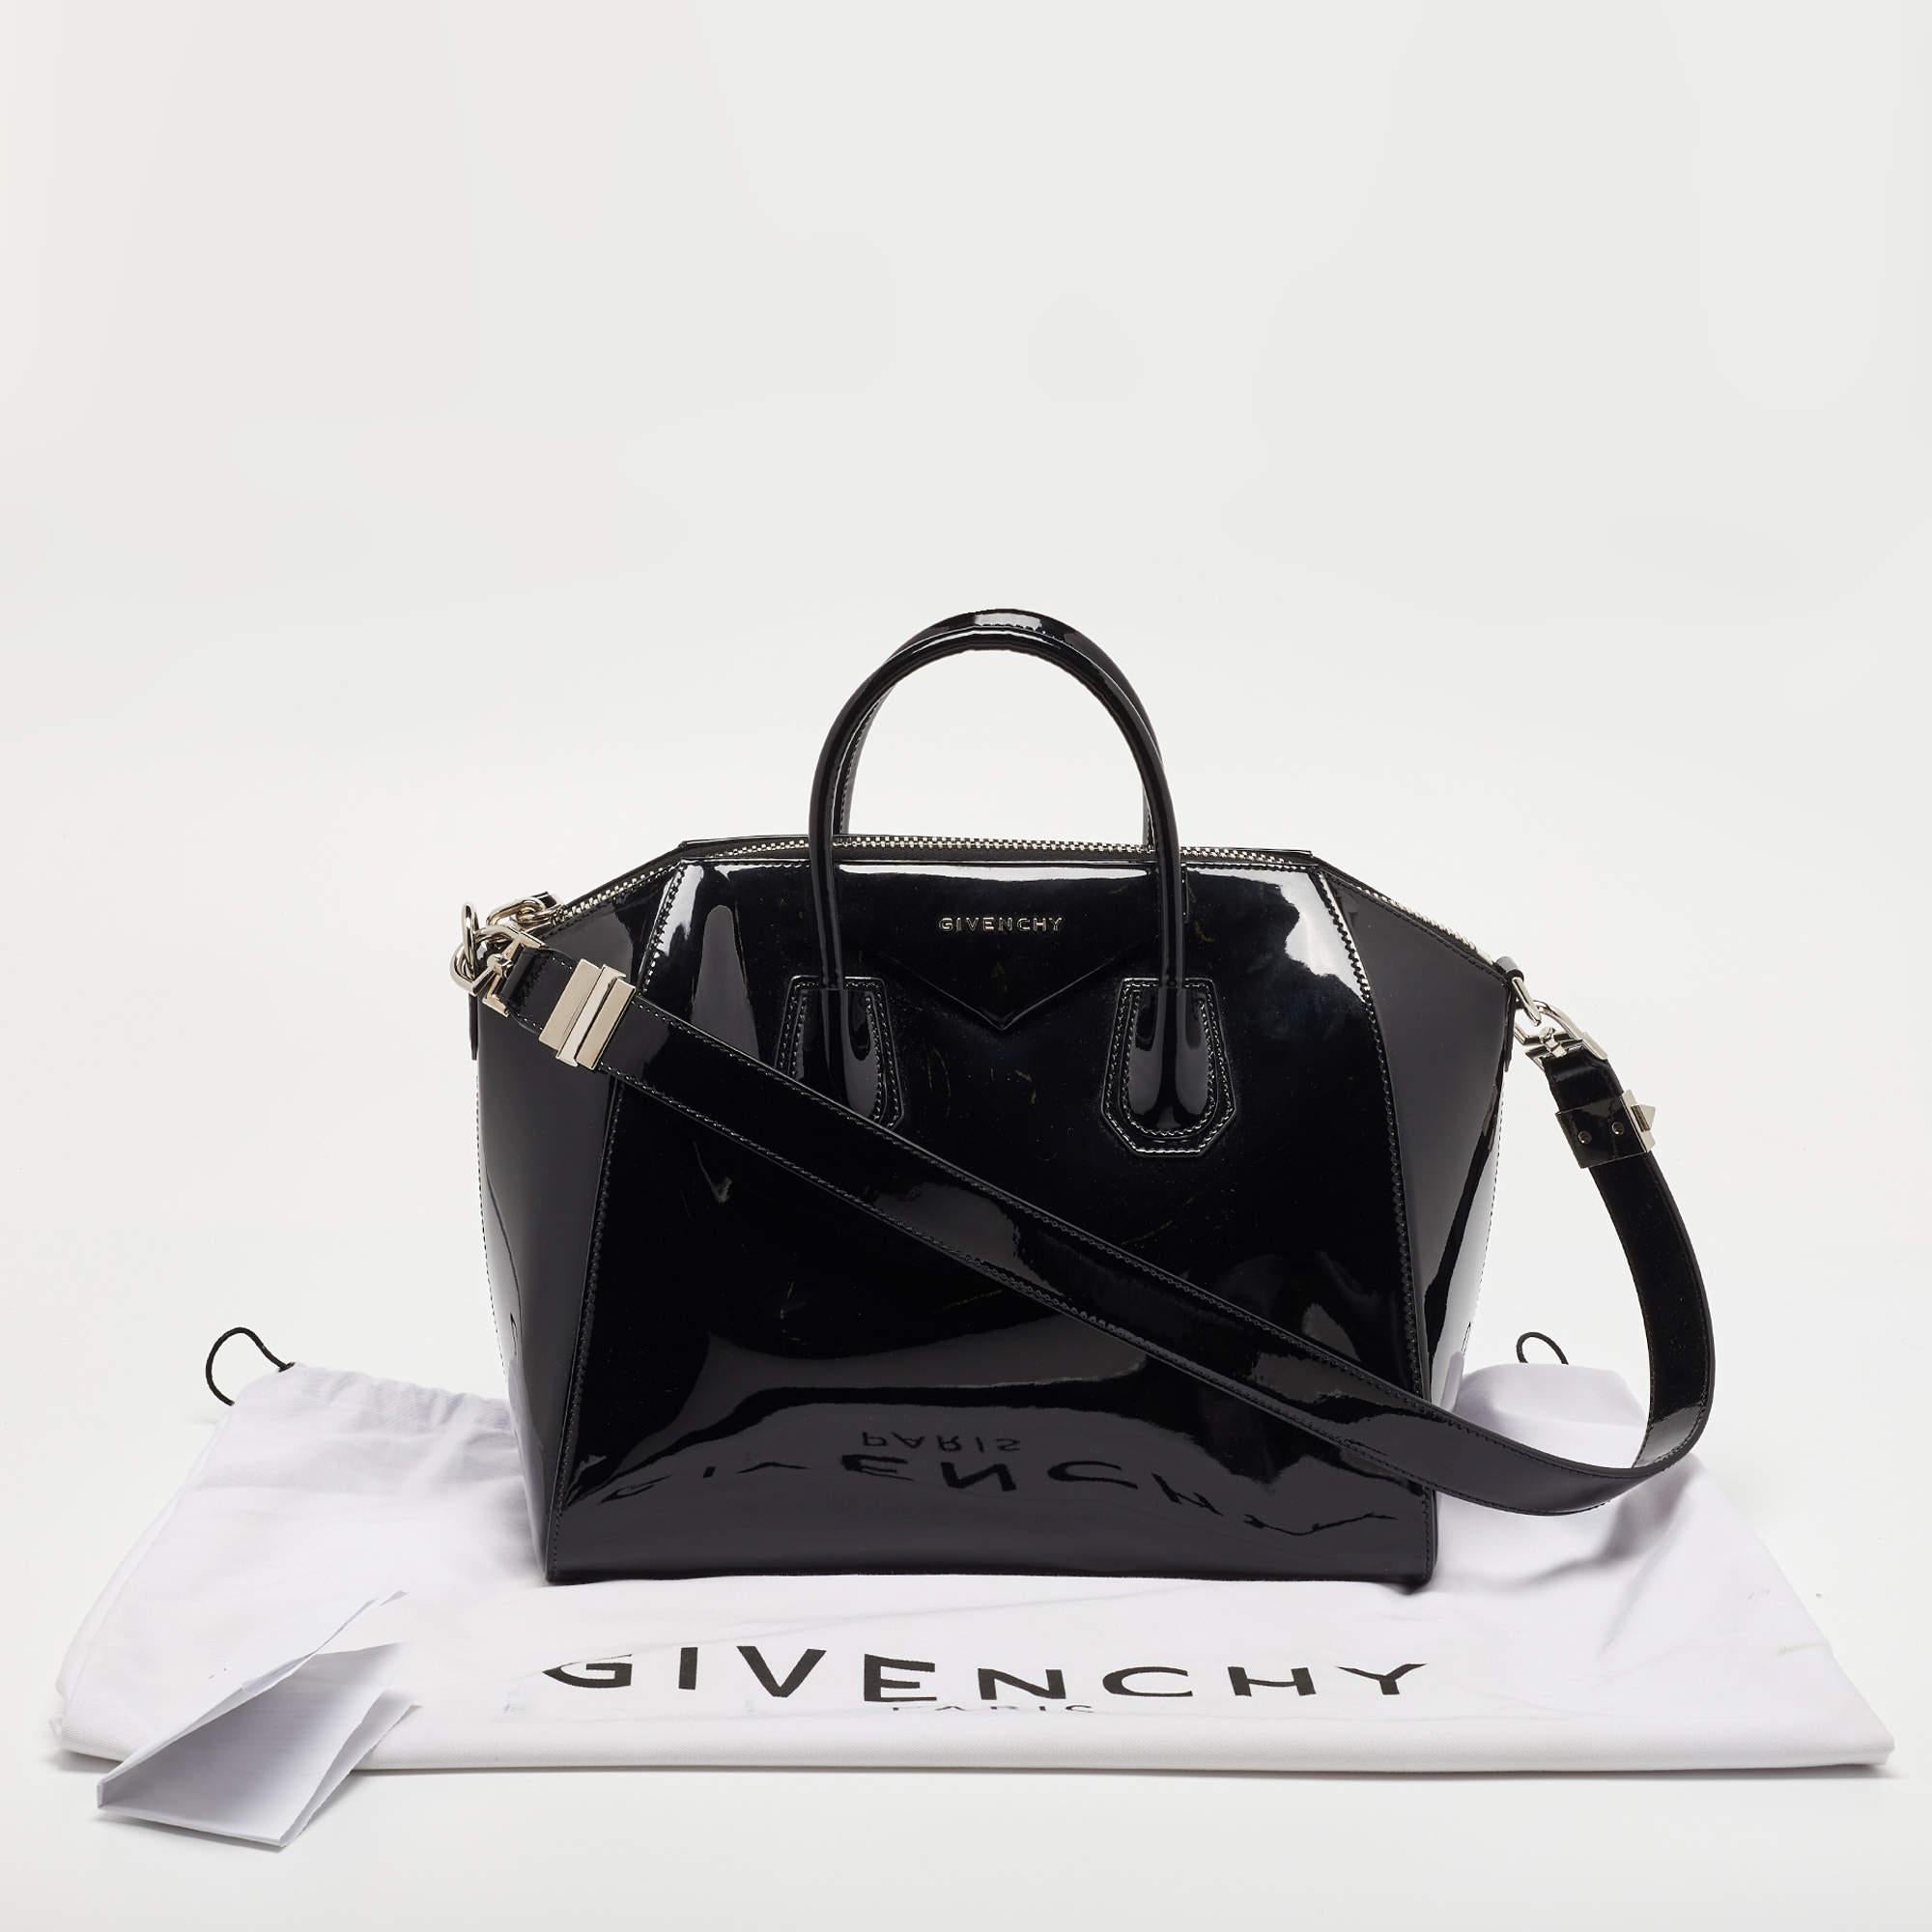 Givenchy Black Patent Leather Medium Antigona Satchel 8